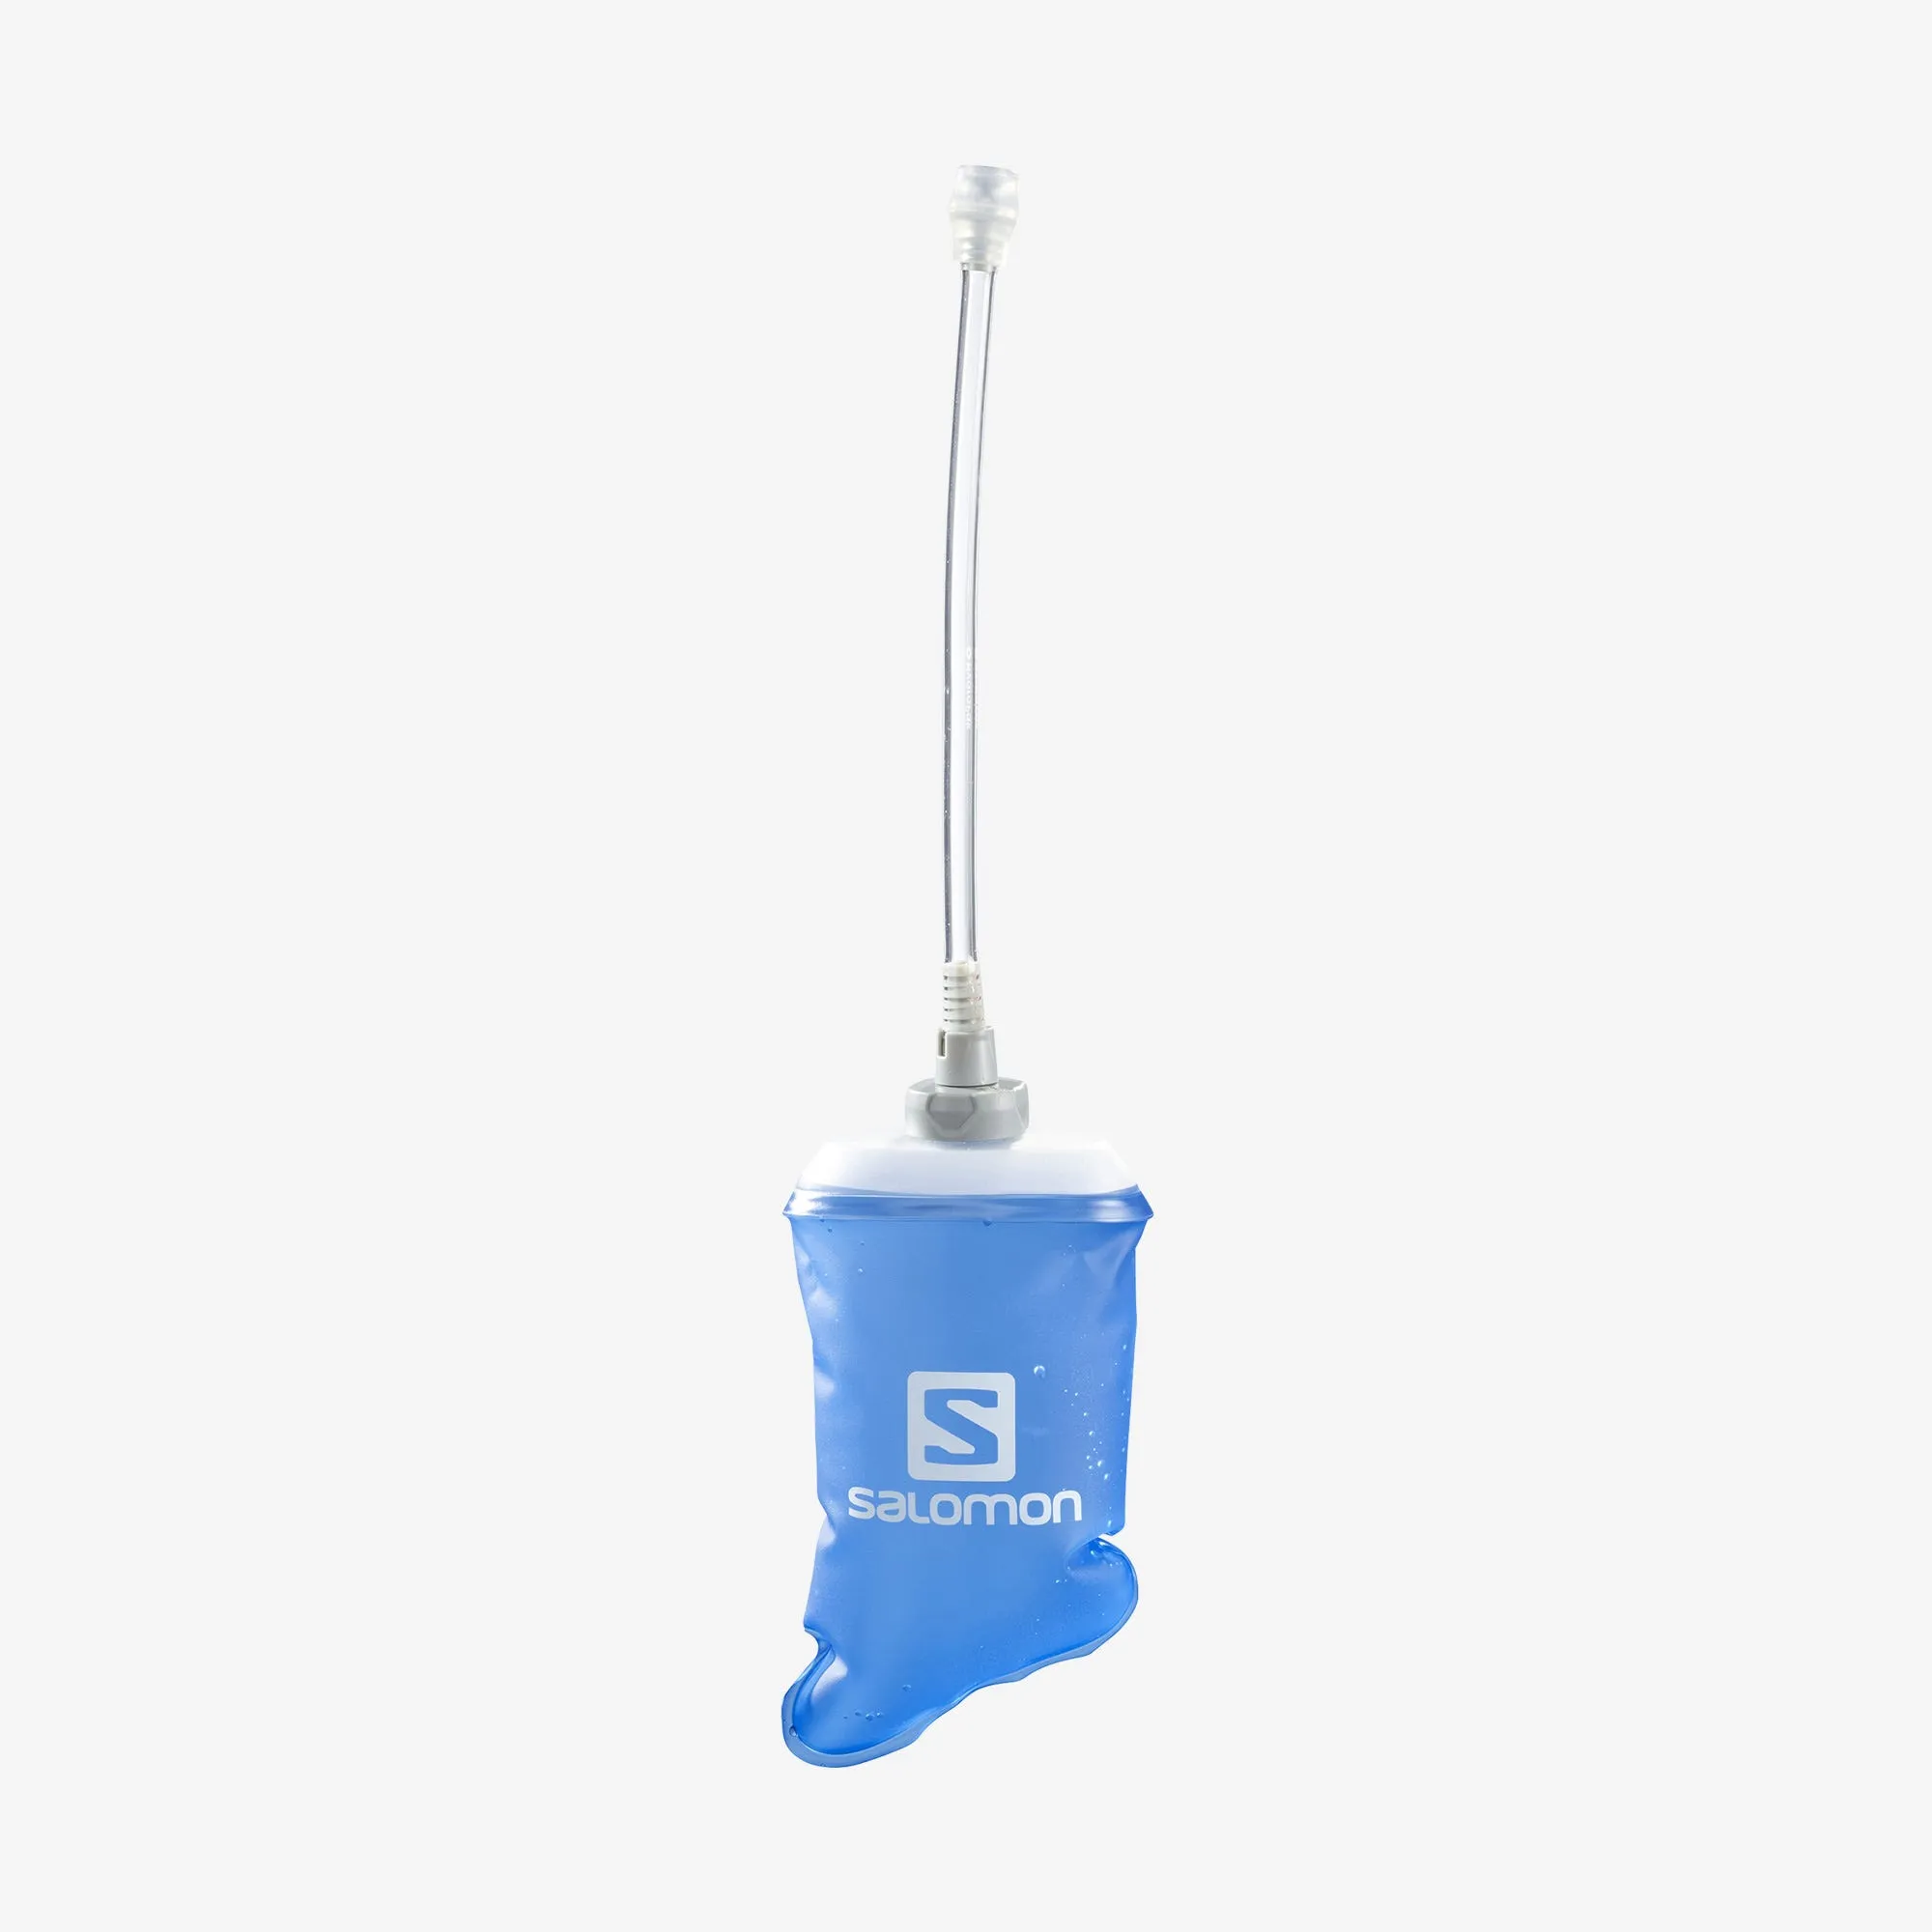 Salomon Soft Flask with Straw 17oz in Clear Blue